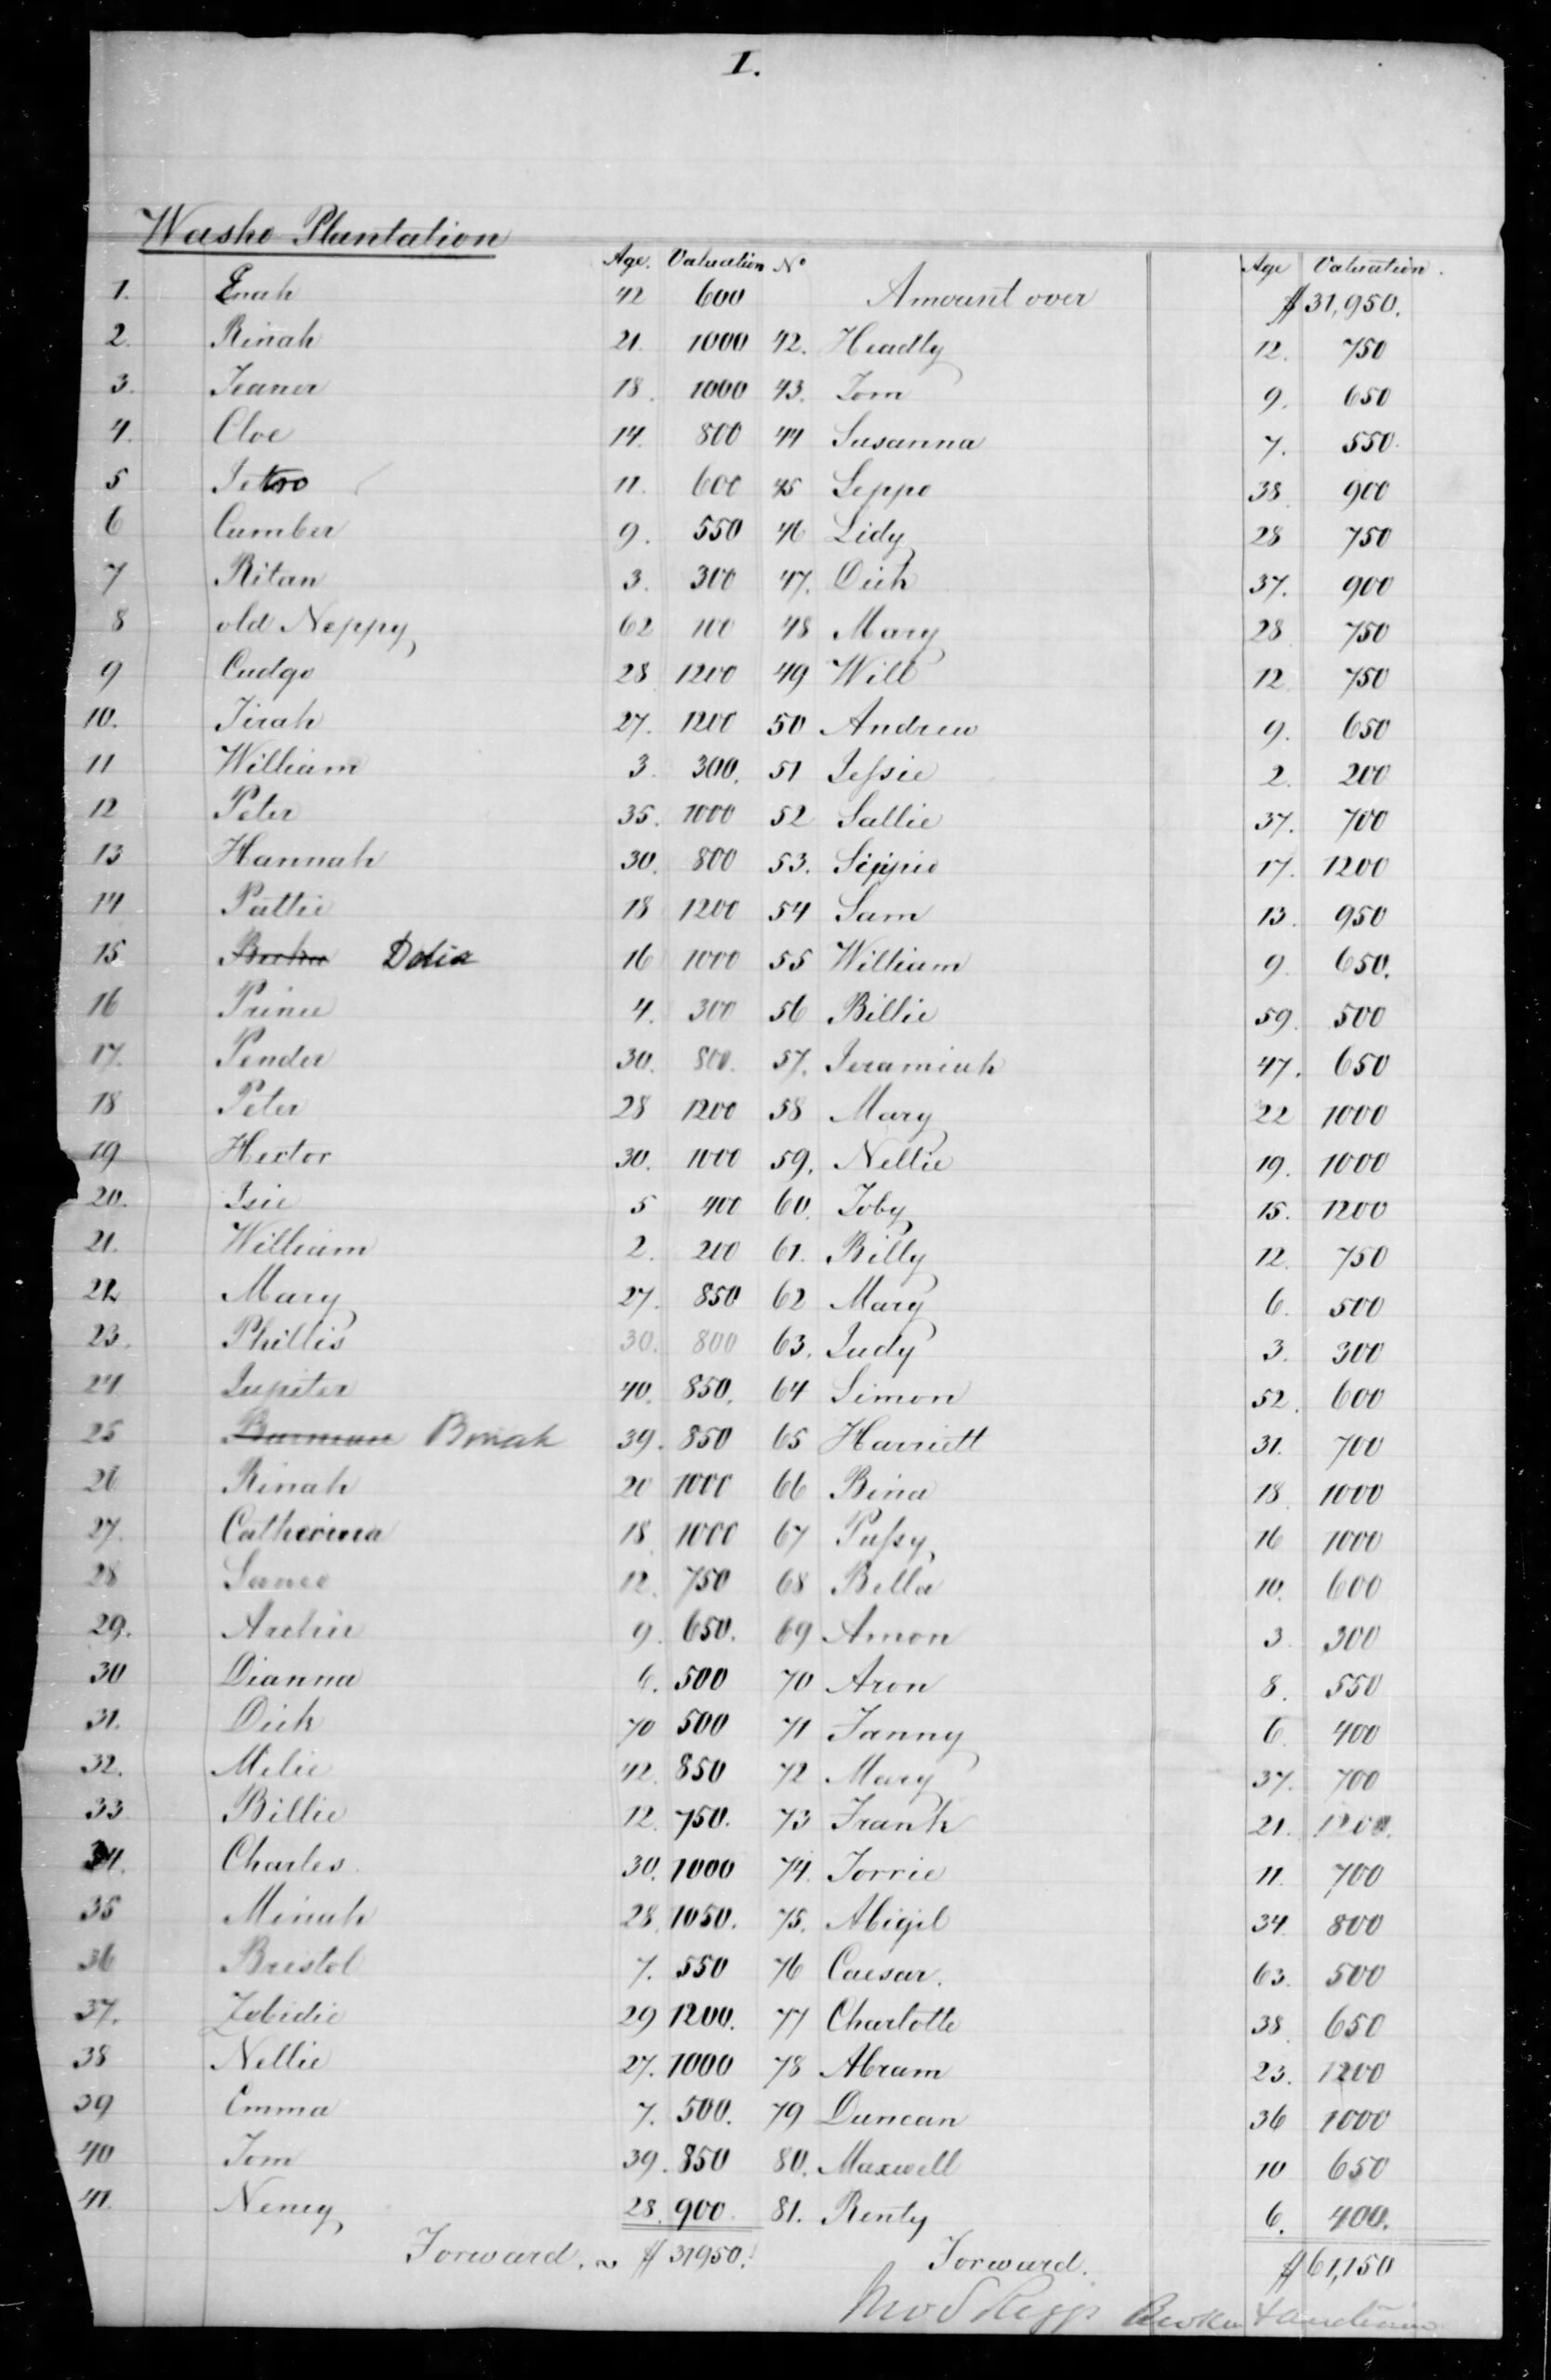 Arthur Blake Confederate Citizens File